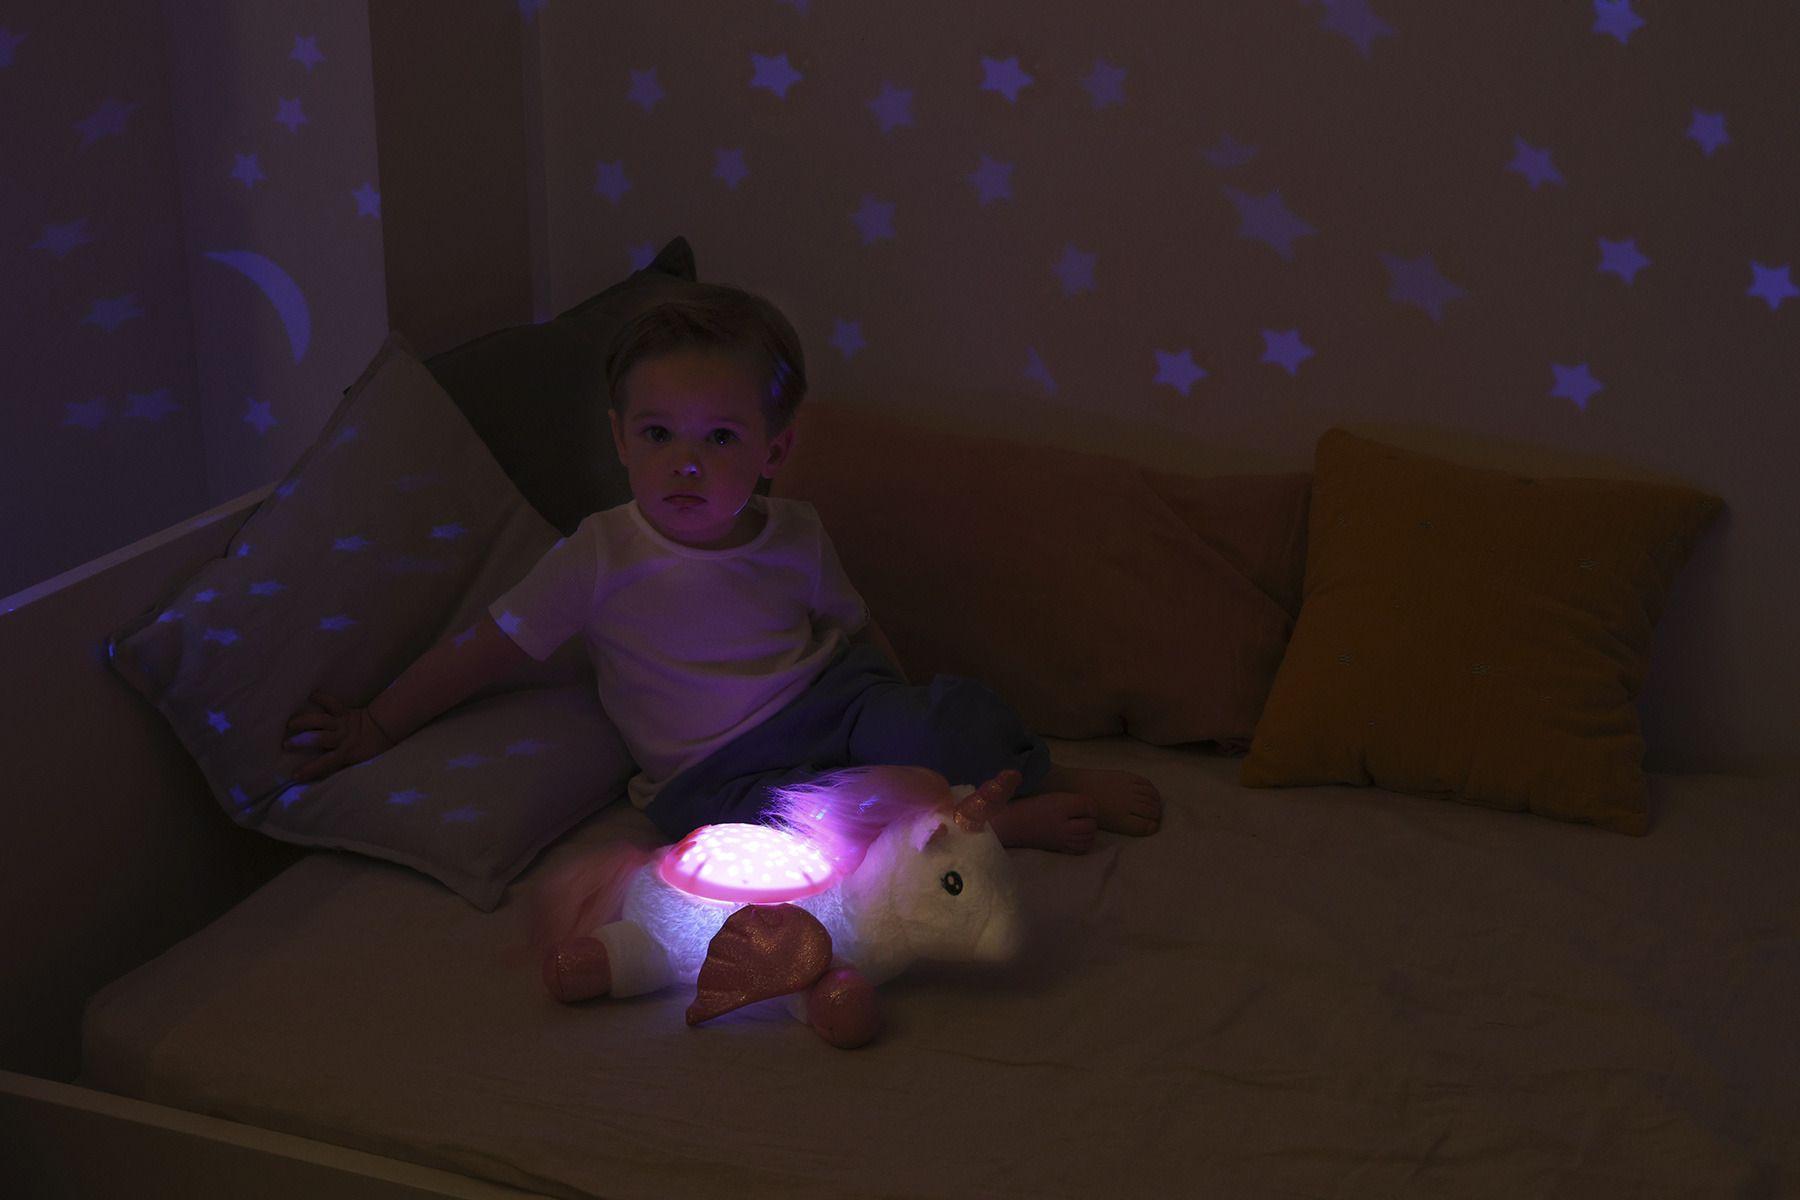 Night lamp with light projection - Unicorn